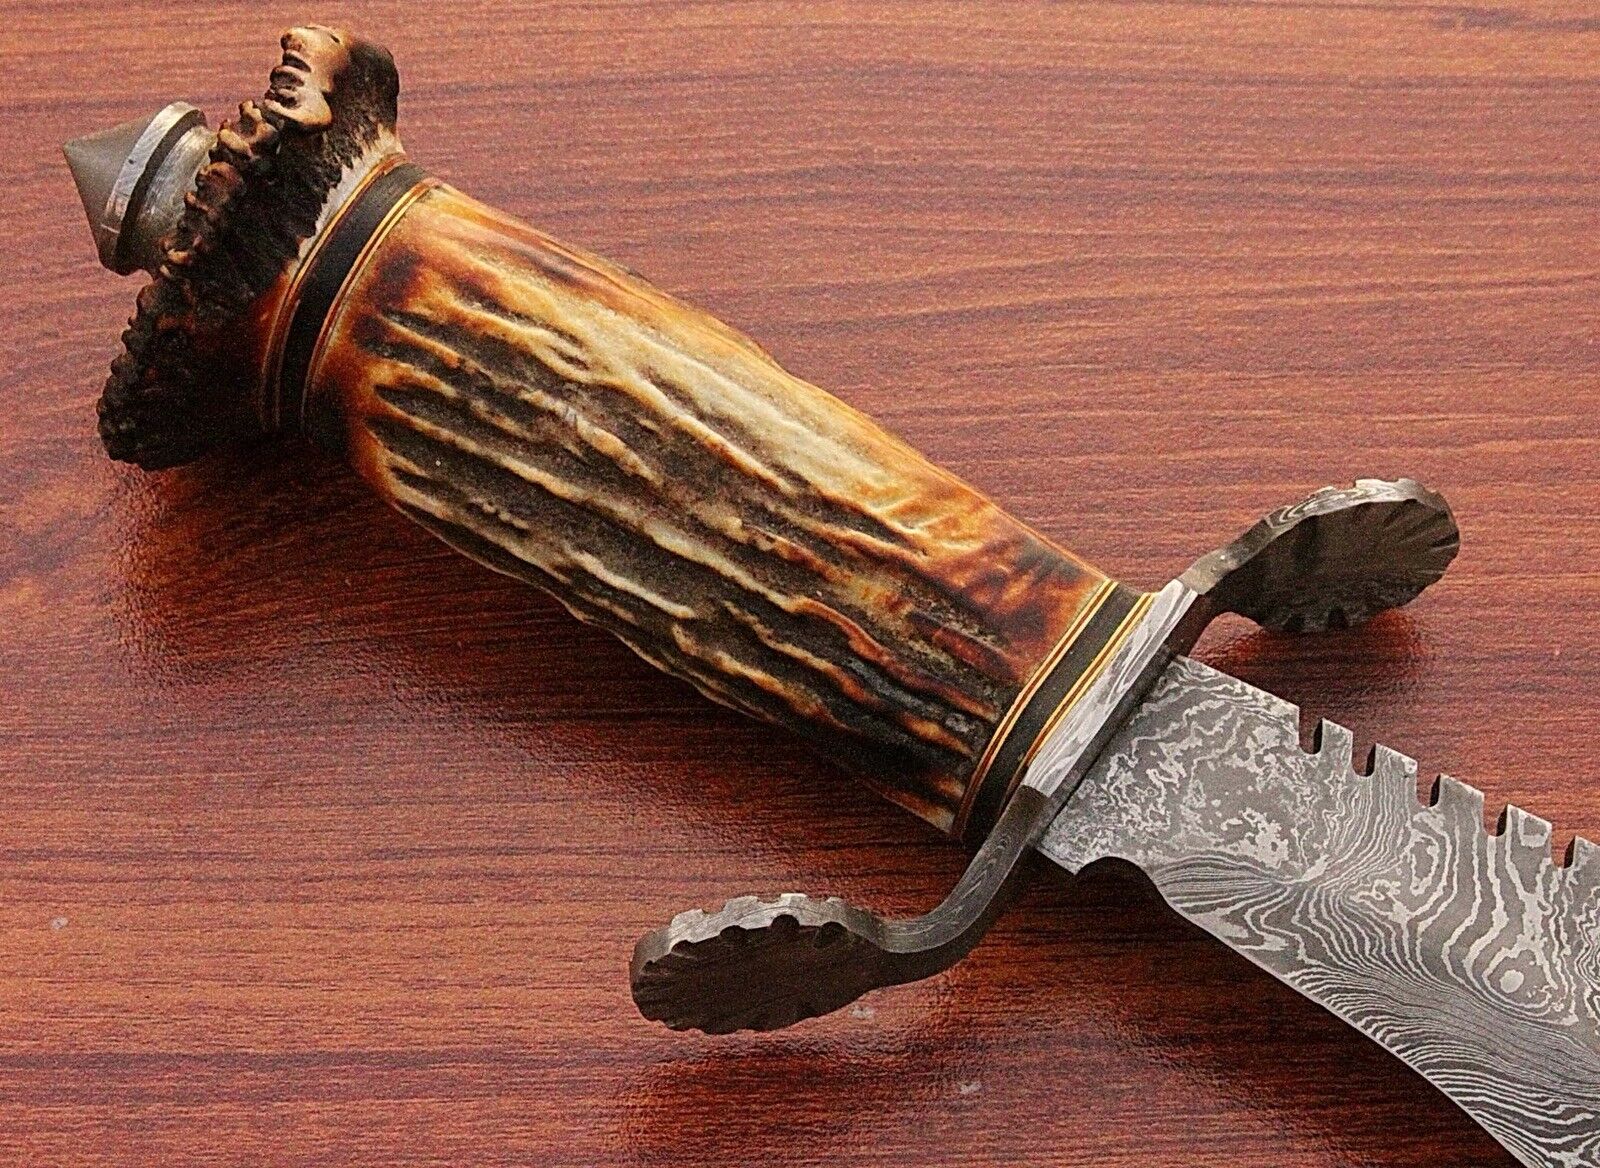 Custom Kitchen Knife Set - Crown Stag